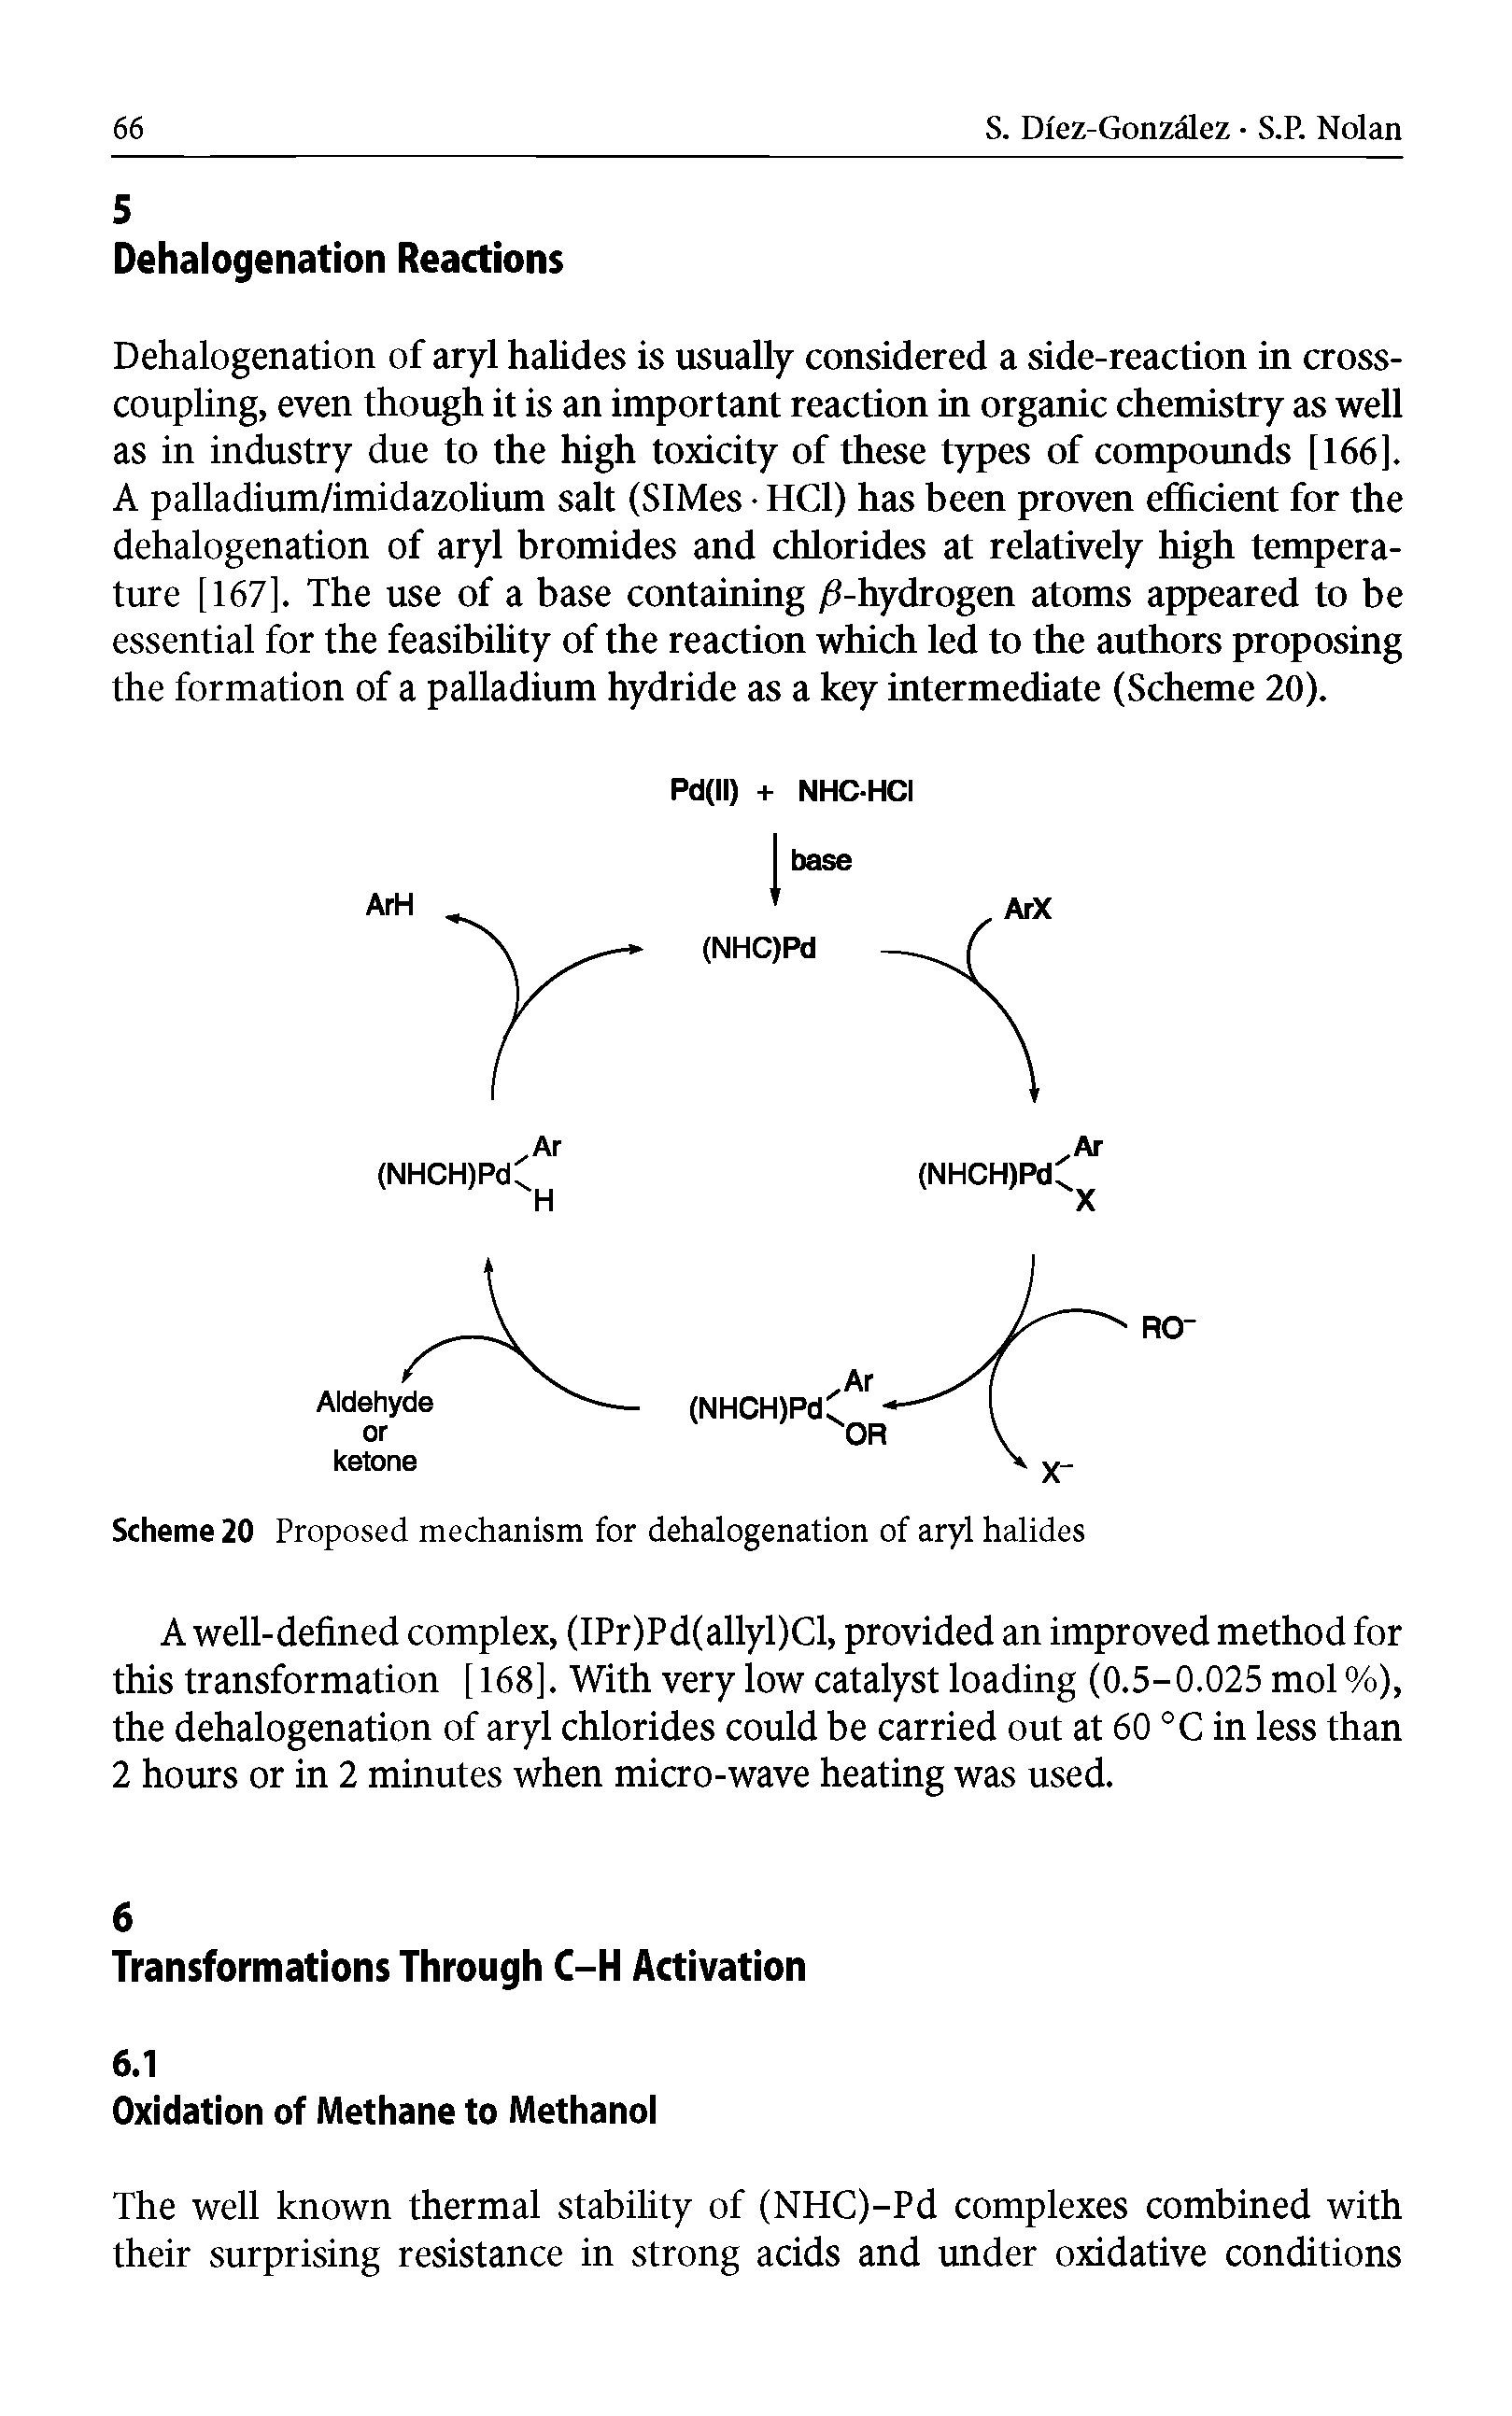 Scheme 20 Proposed mechanism for dehalogenation of aryl halides...